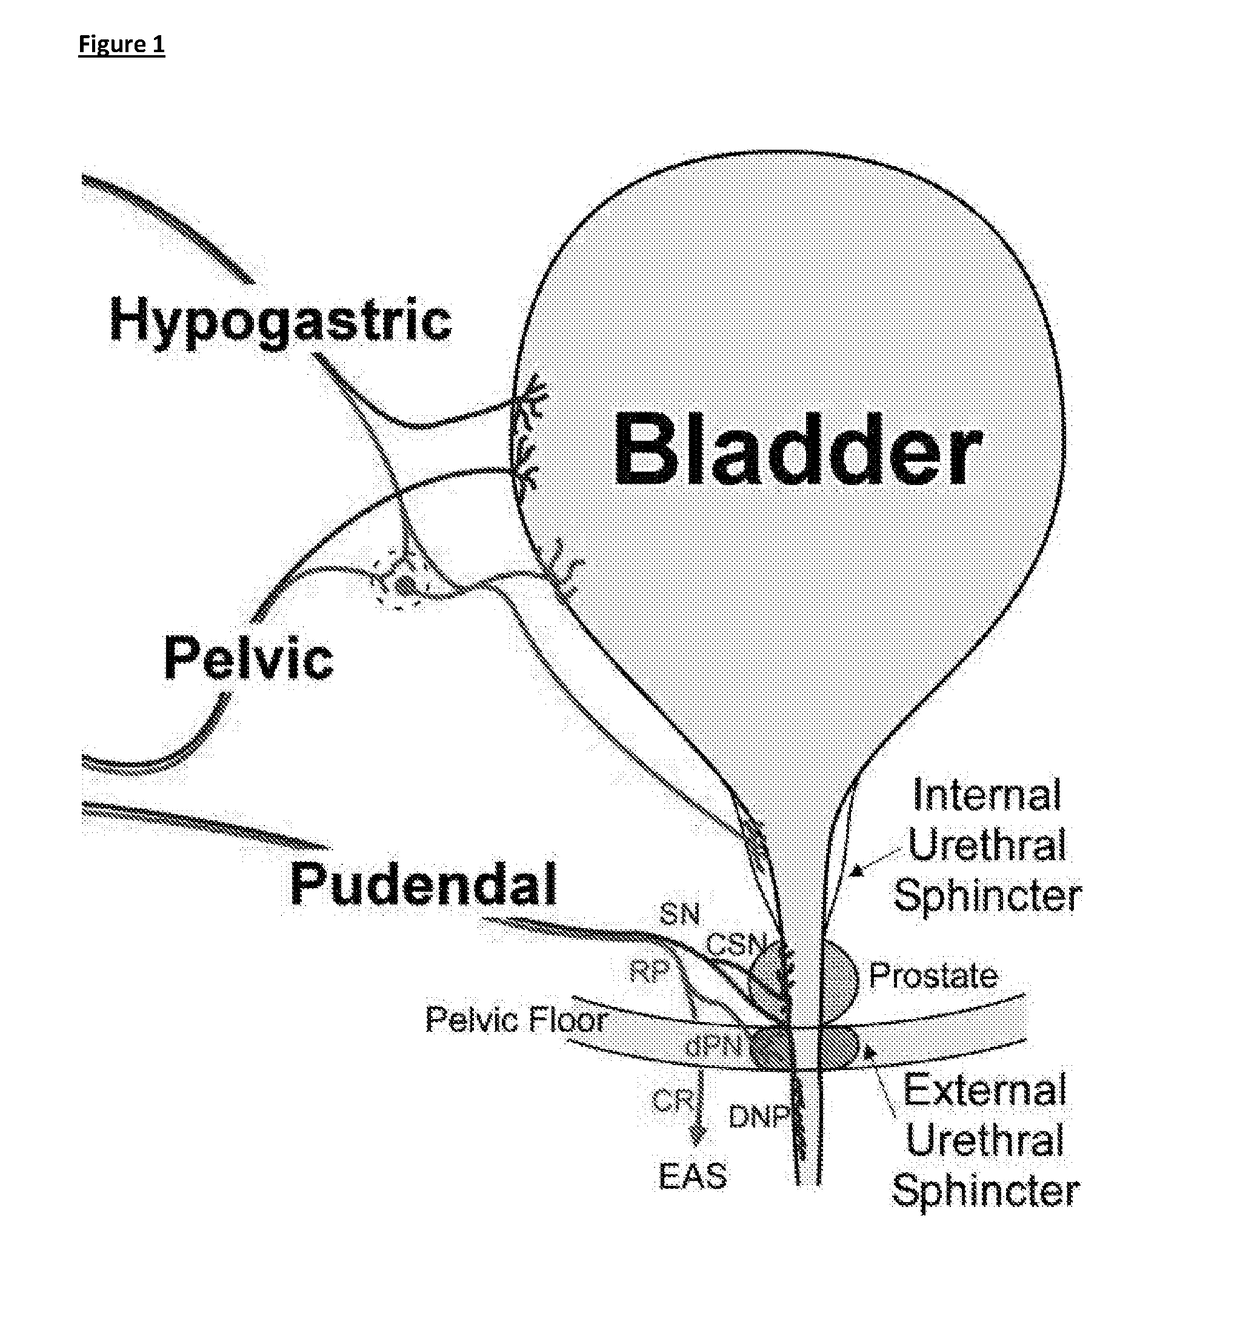 State-dependent peripheral neuromodulation to treat bladder dysfunction